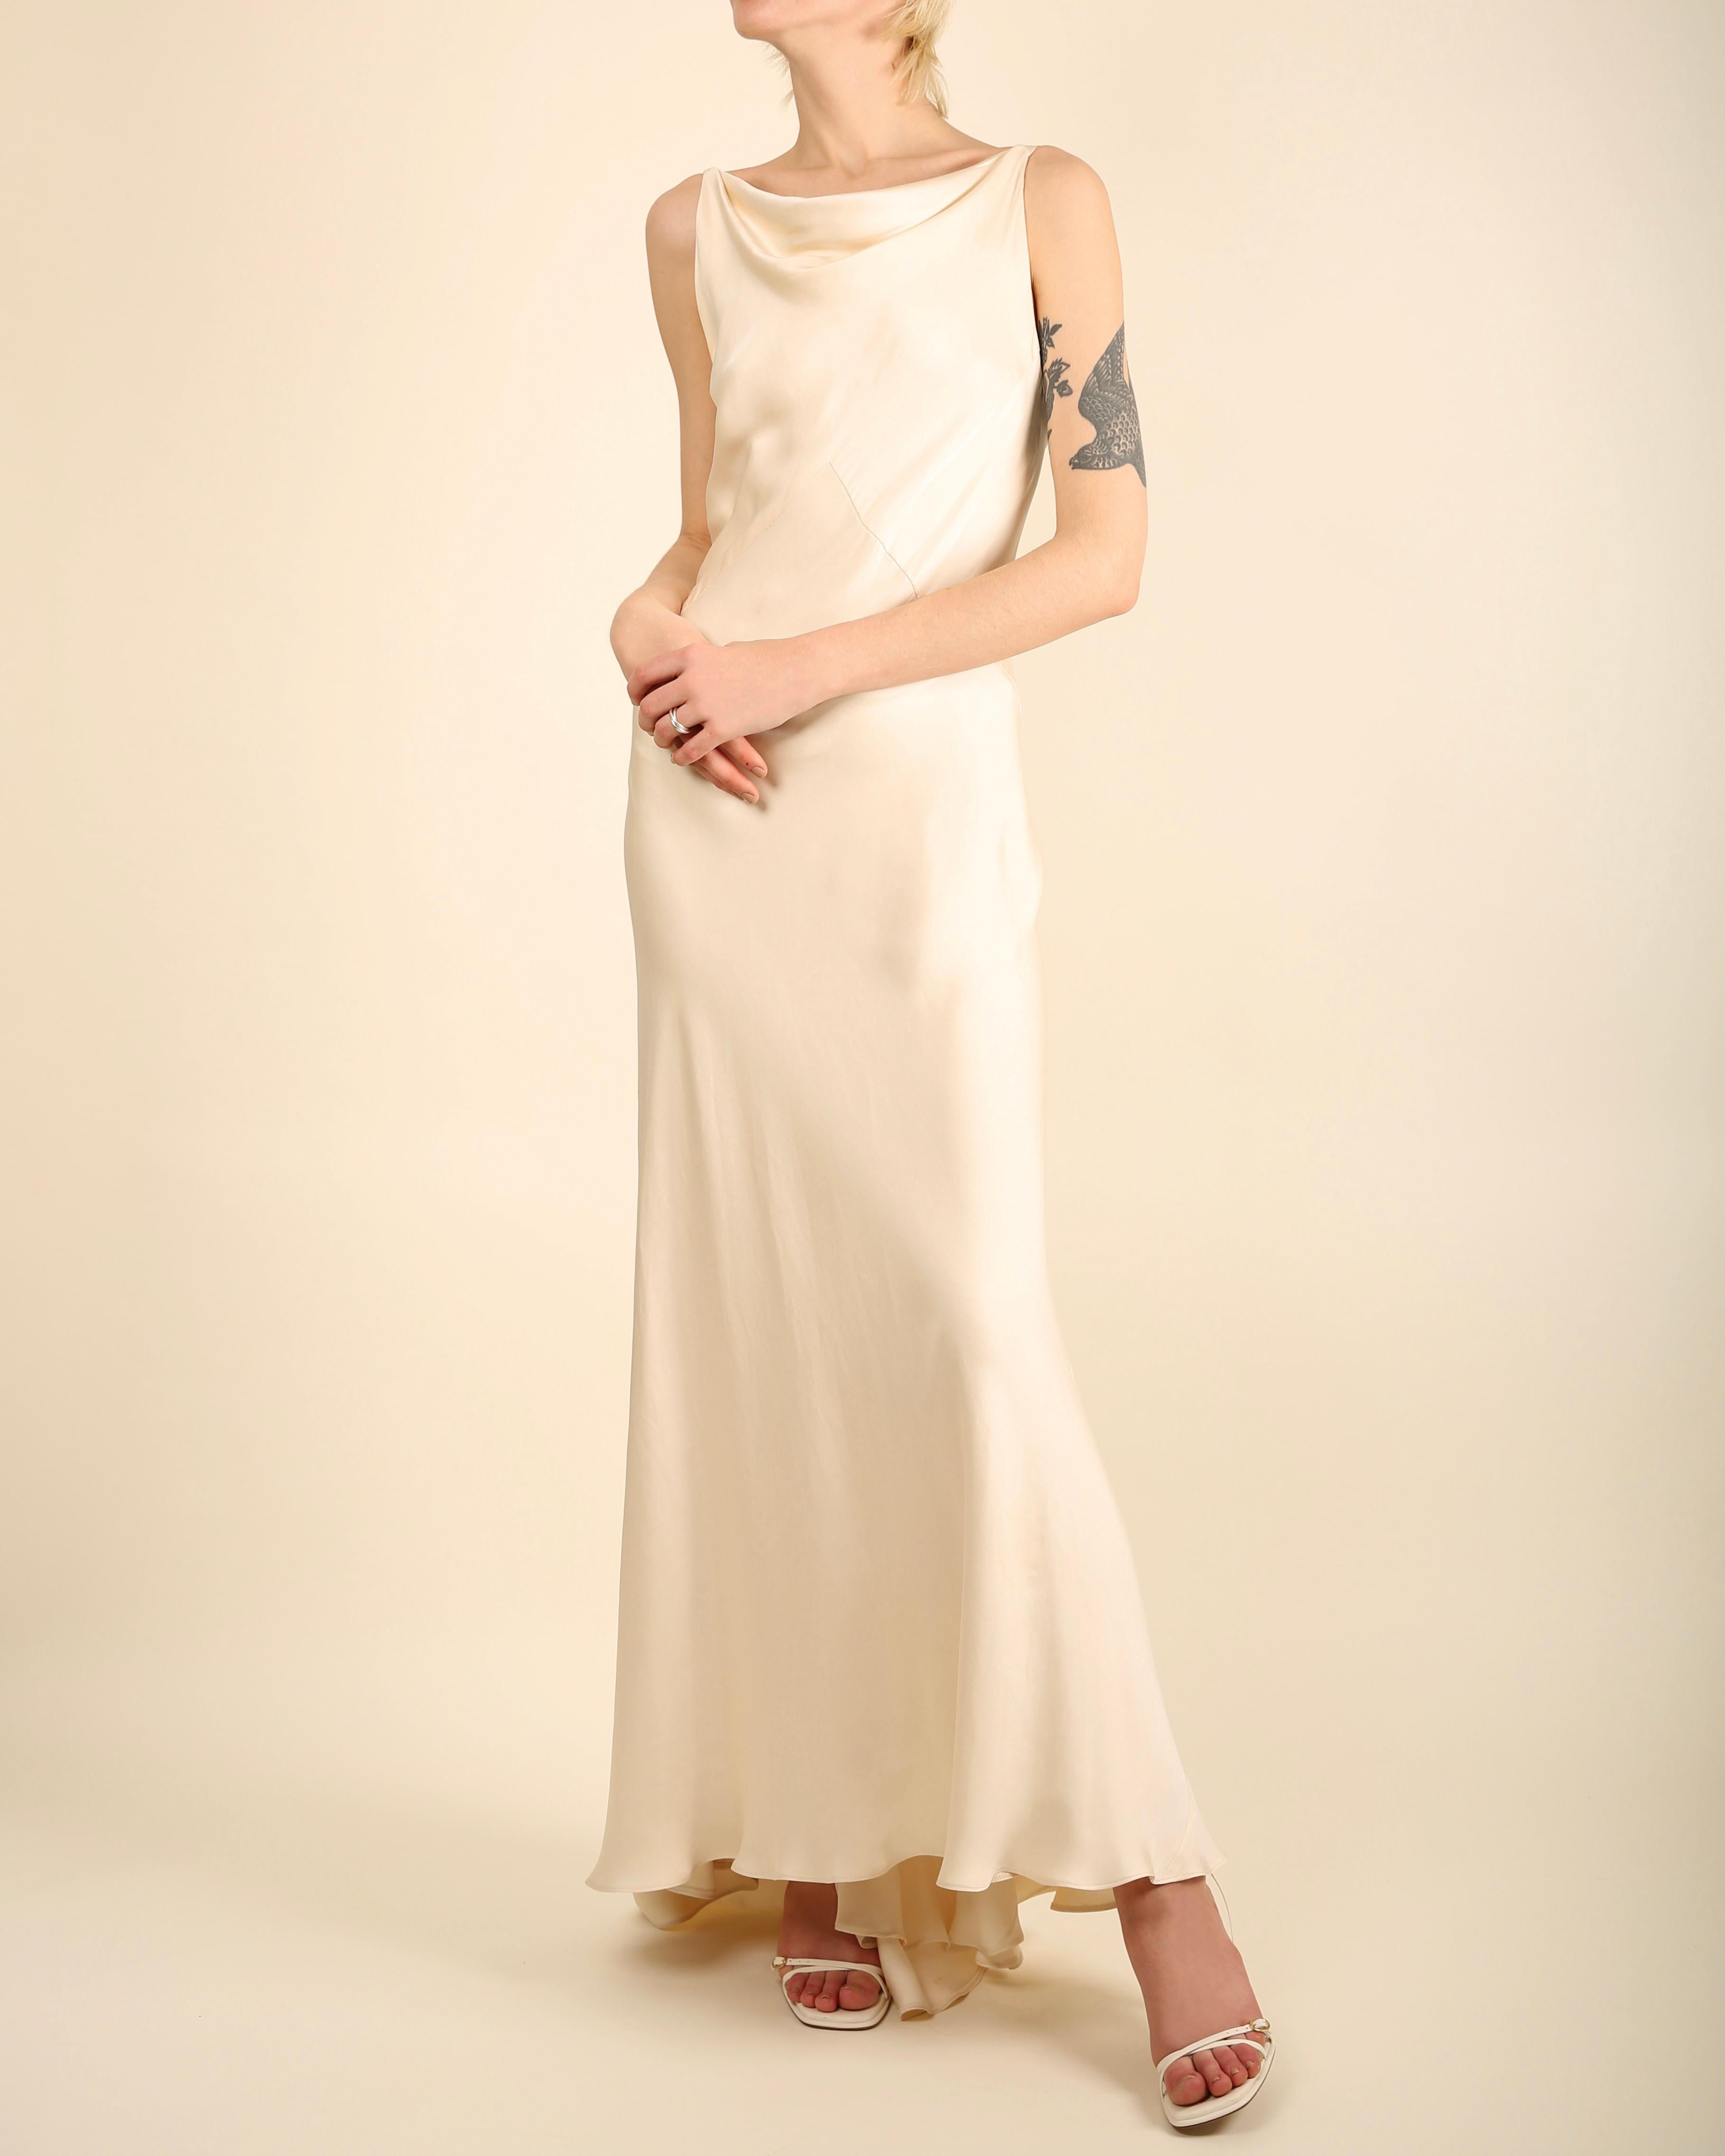 Ralph Lauren champagne bias cut backless silk slip style backless gown dress 3